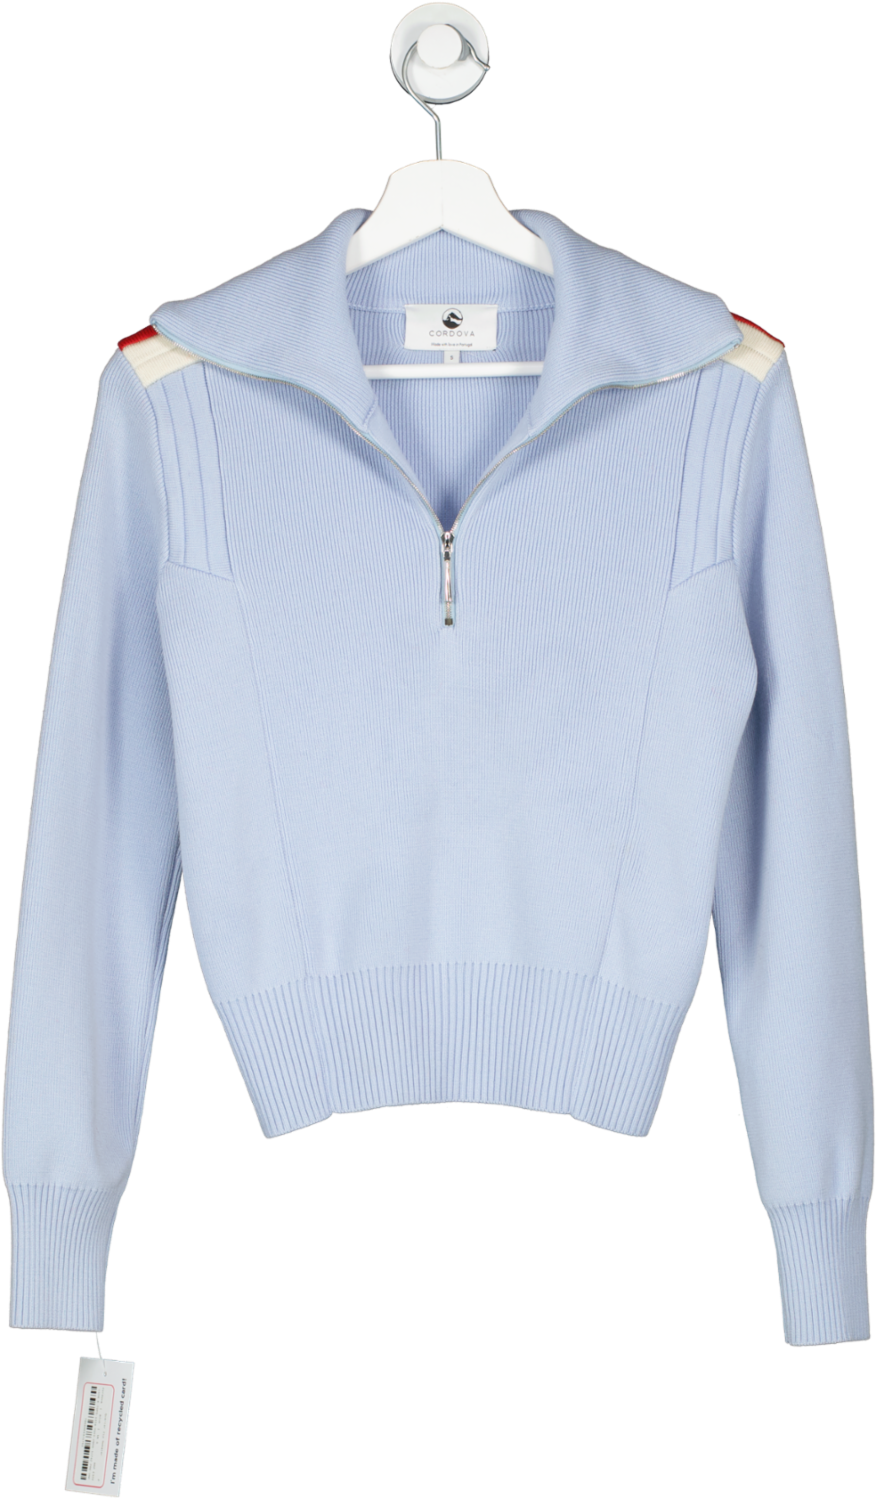 Cordova Blue Quarter Zip Sweater UK S